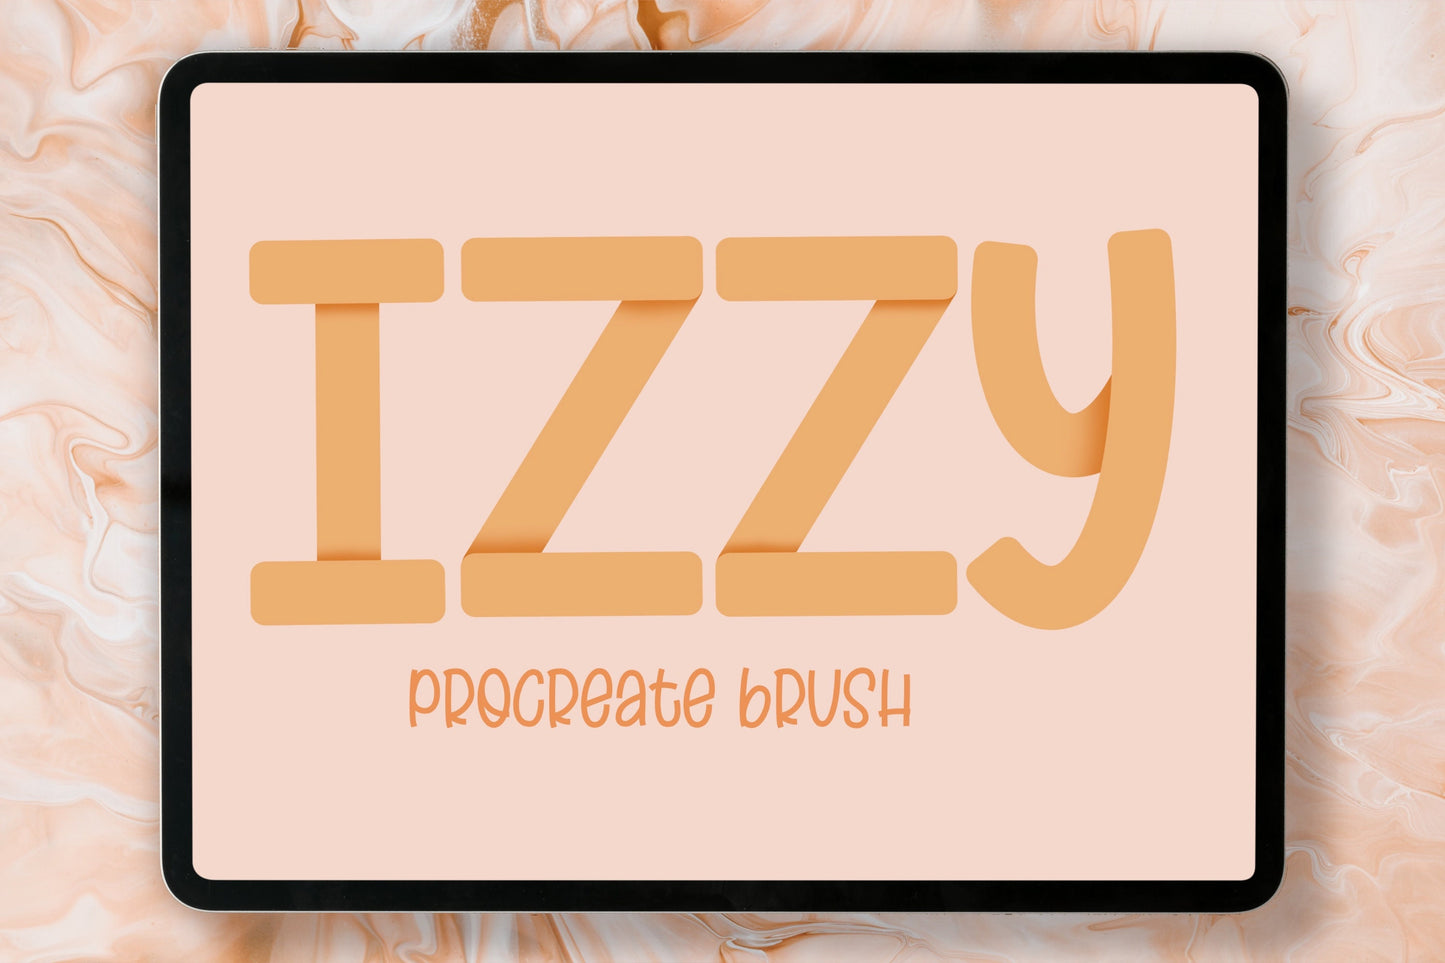 Izzy Procreate Lettering Brush